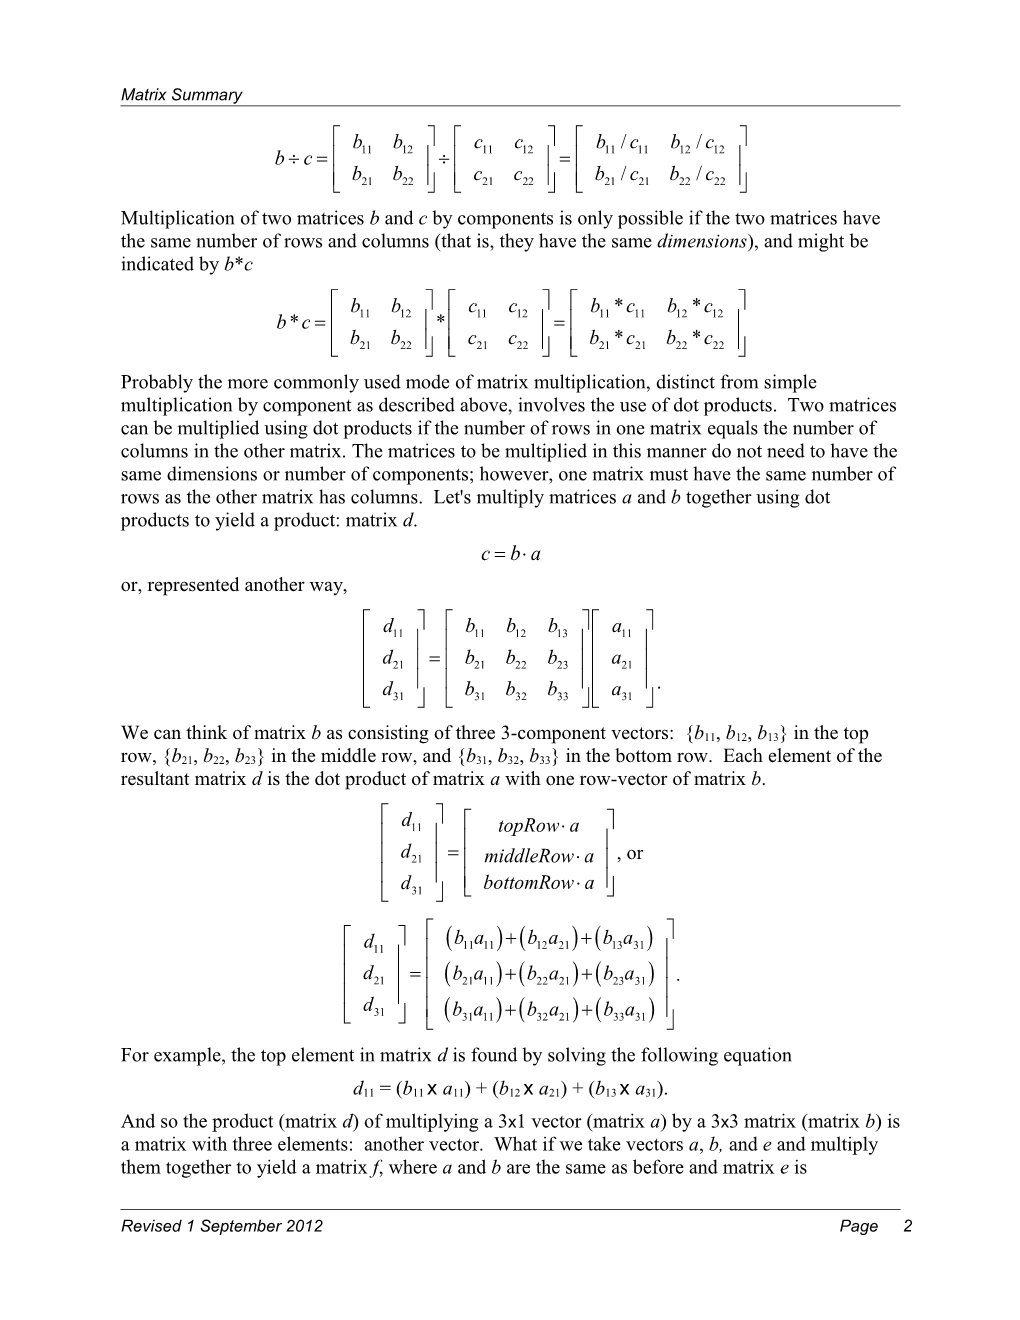 Matrices and Matrix Math